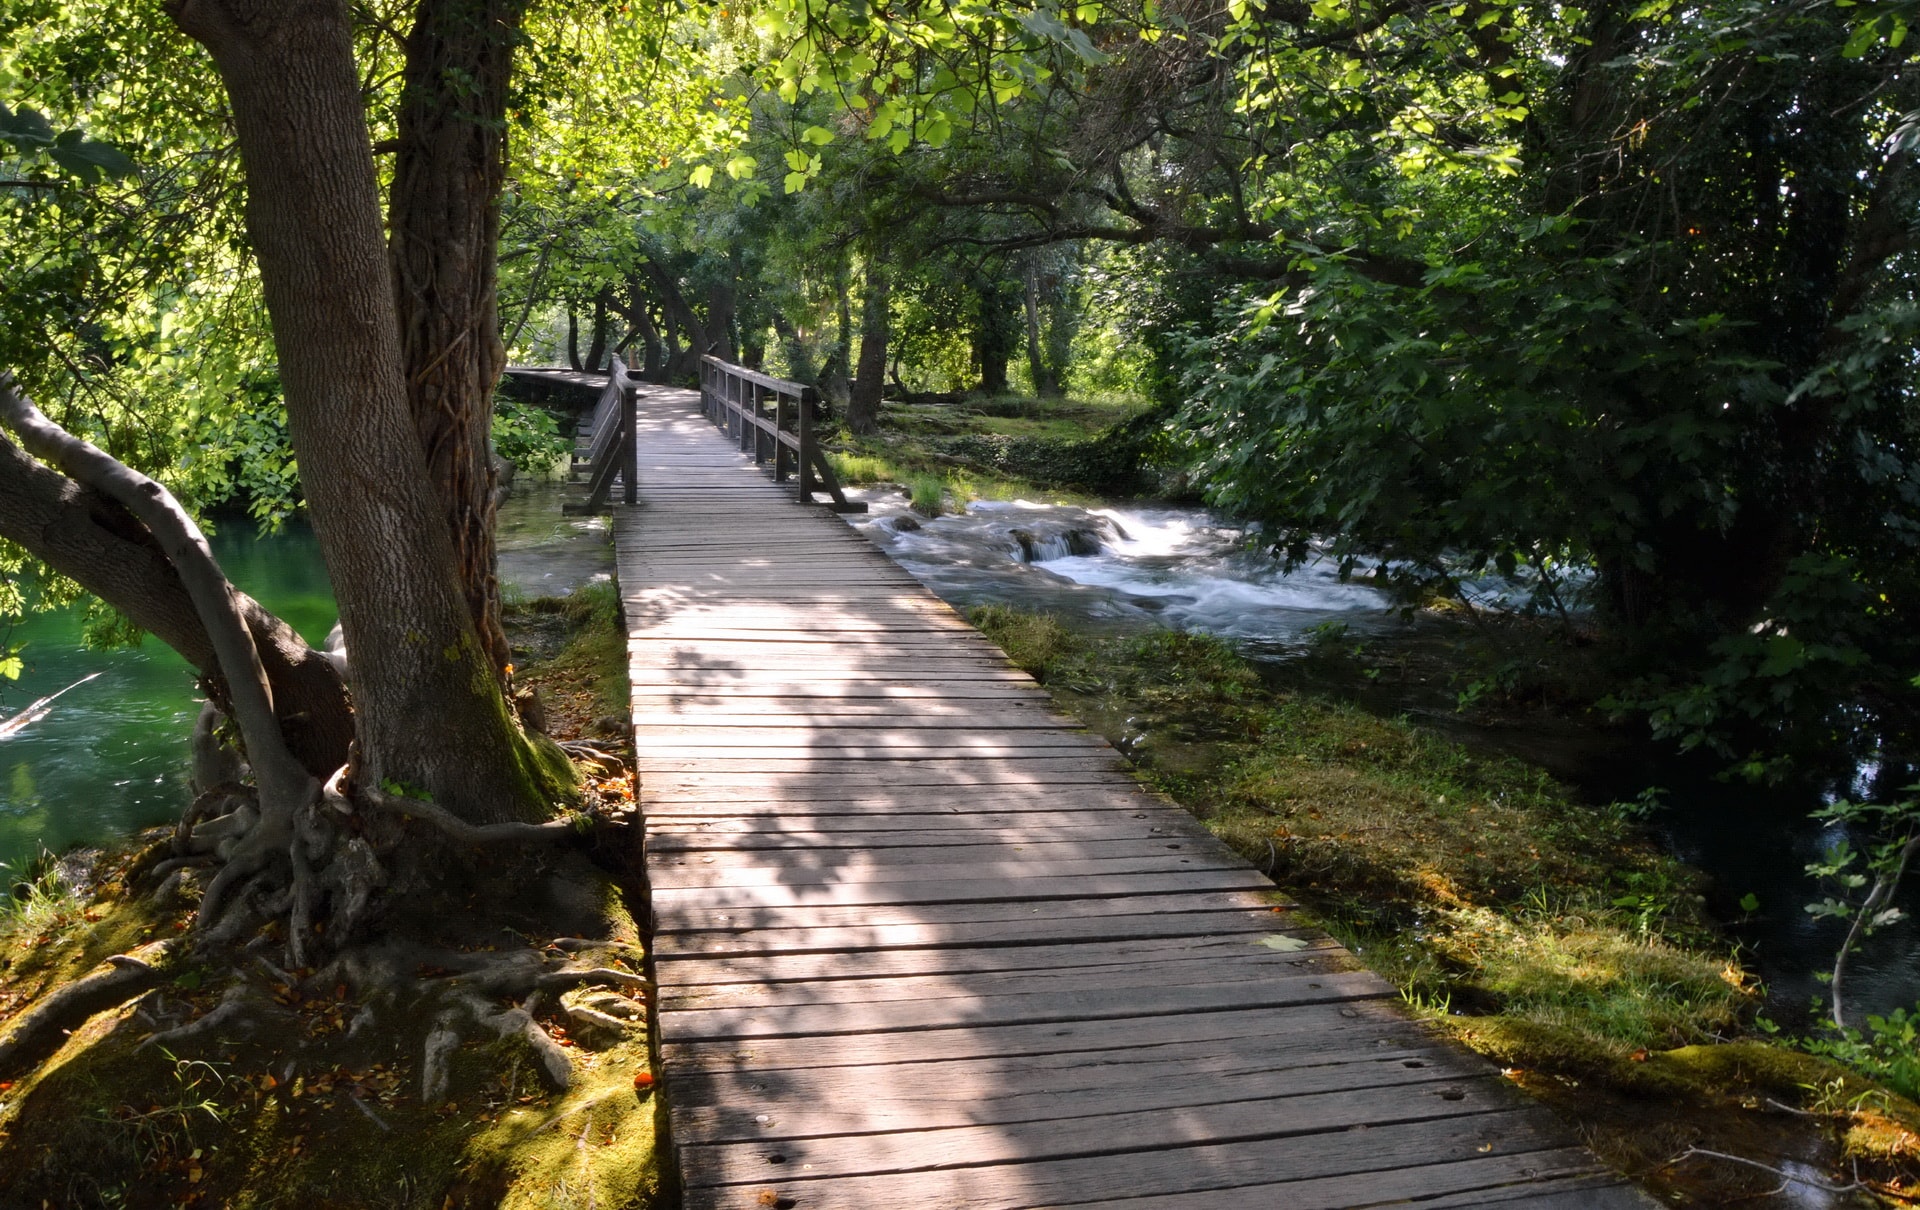 The wooden bridges in Krka take visitors through beatiful nature